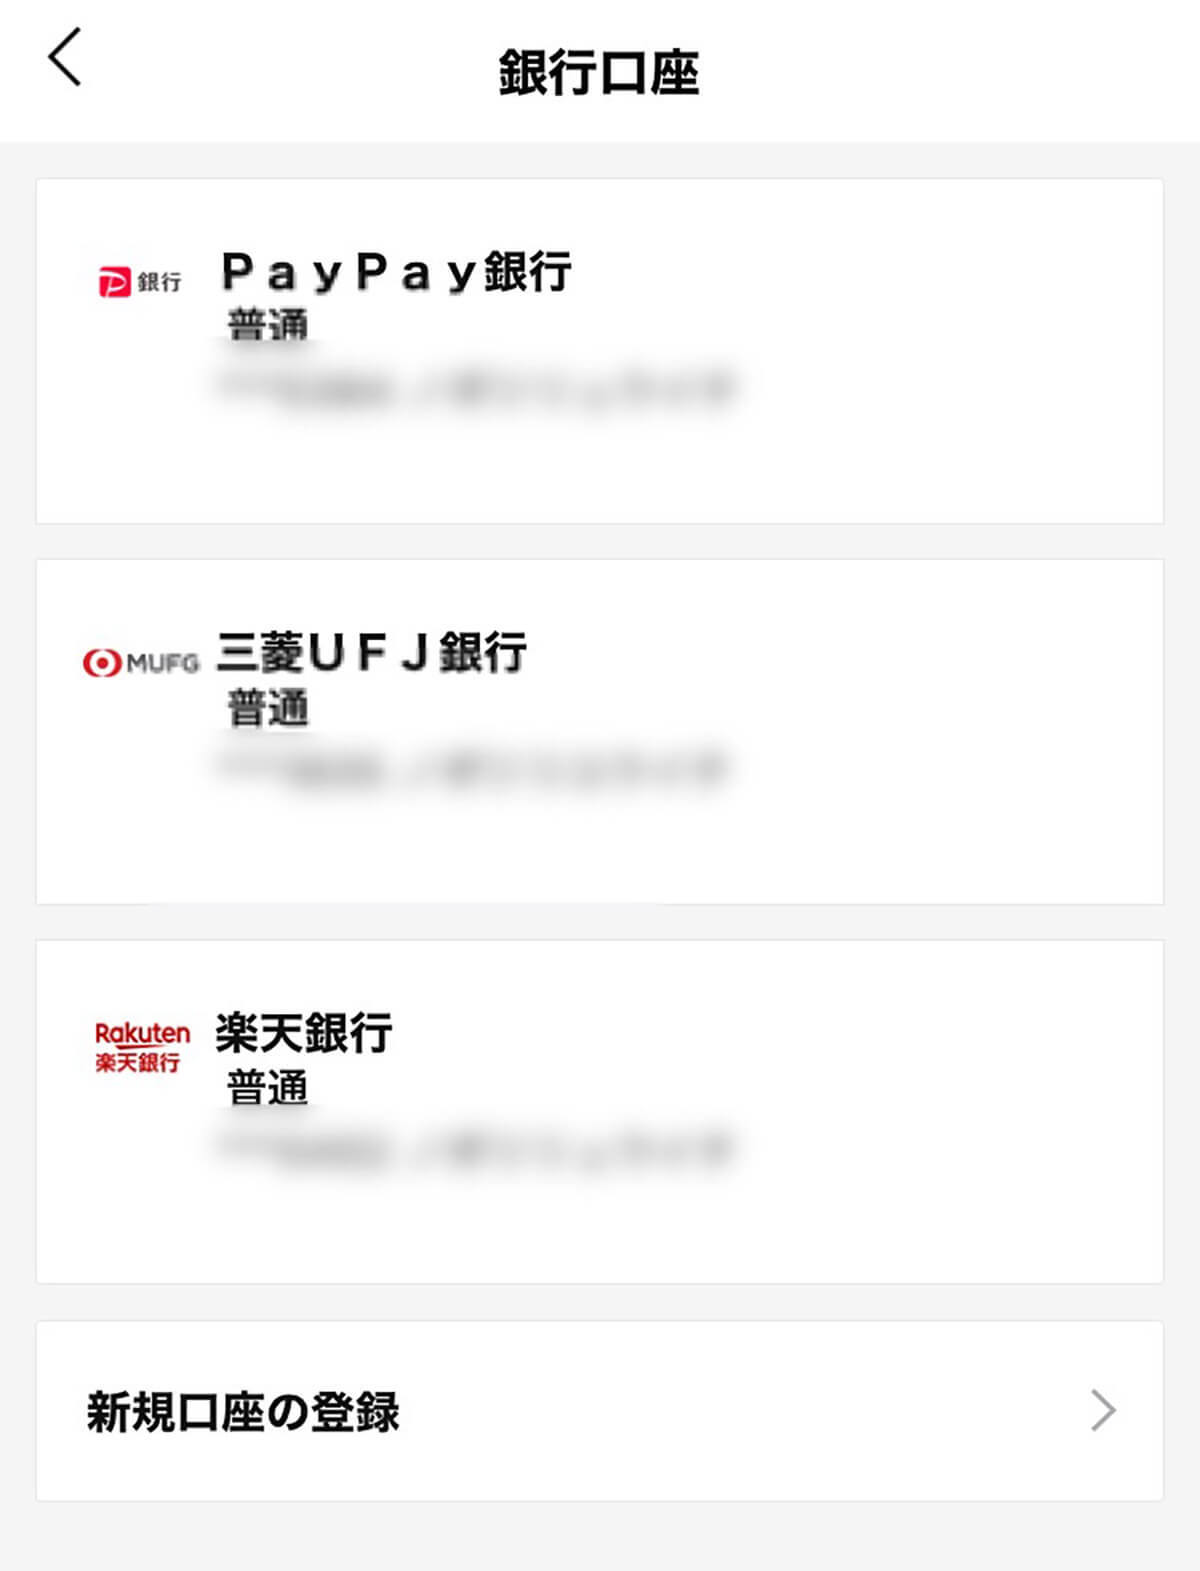 「LINE Pay×セブン銀行ATM」からキャッシュカードなしで現金を引き出す方法！